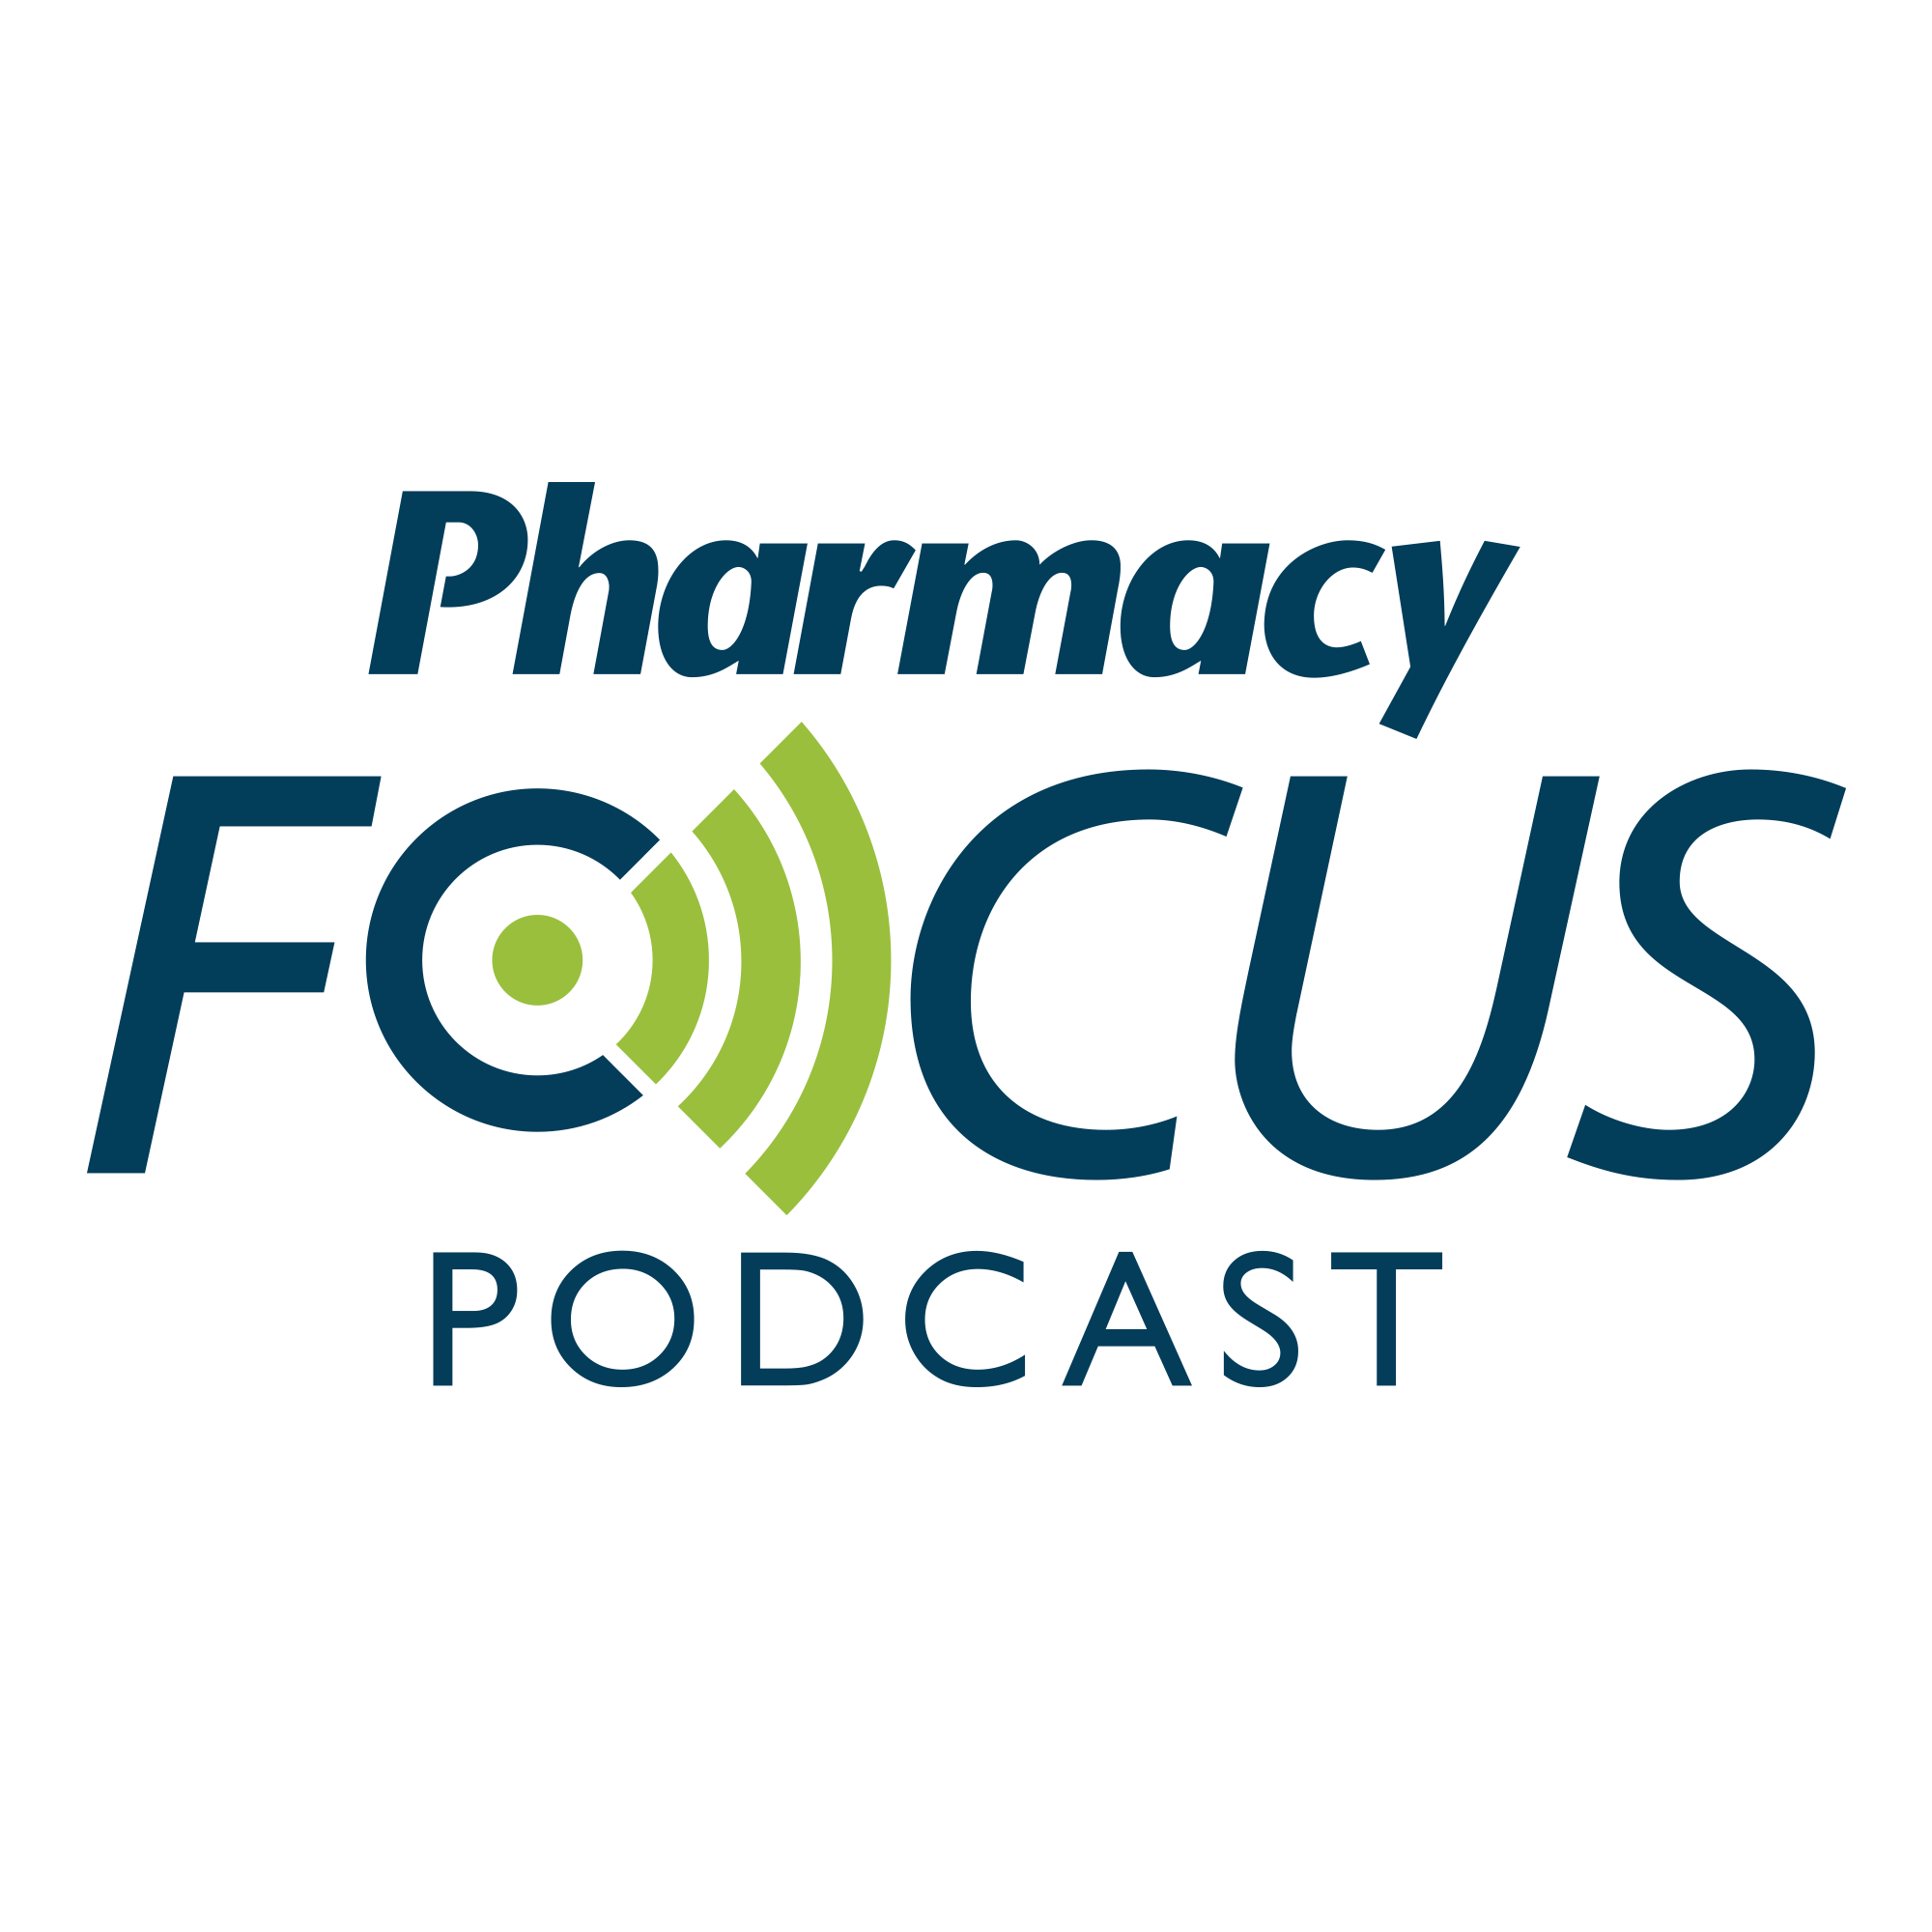 Pharmacy Focus: Turning the Tide On Obesity - Episode 1